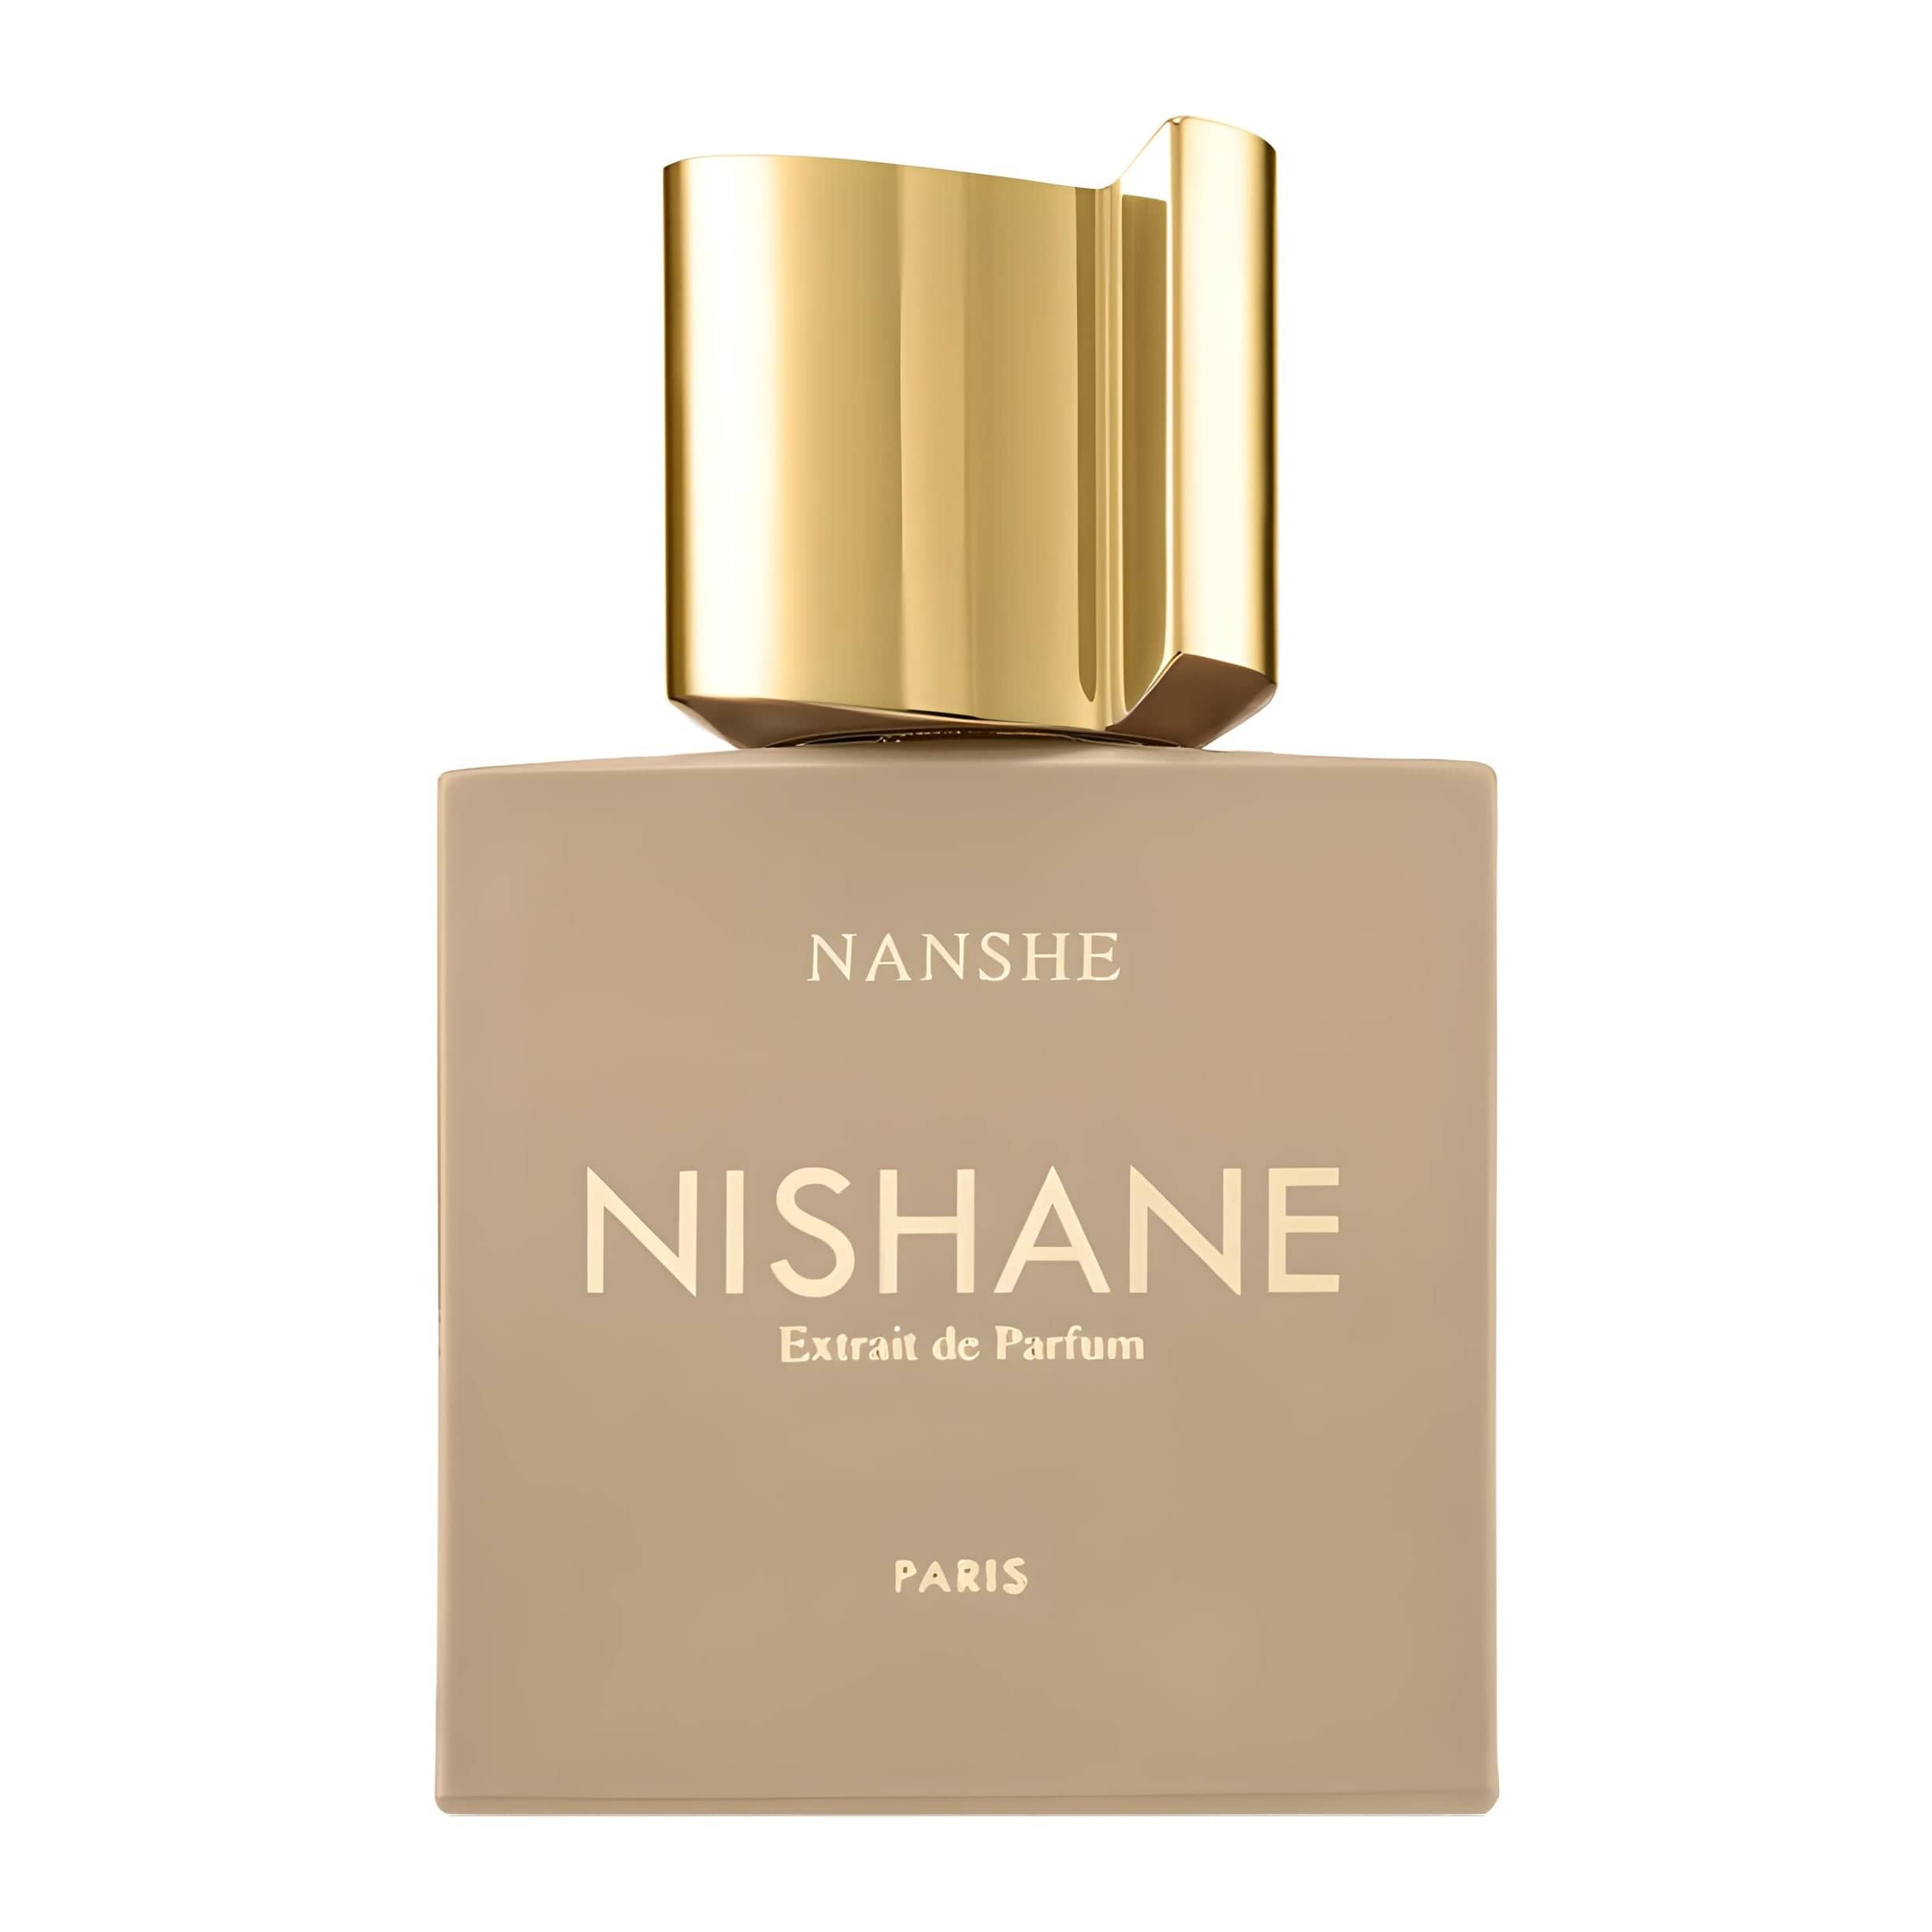 Nanshe Eau de Parfum Eau de Parfum NISHANE   